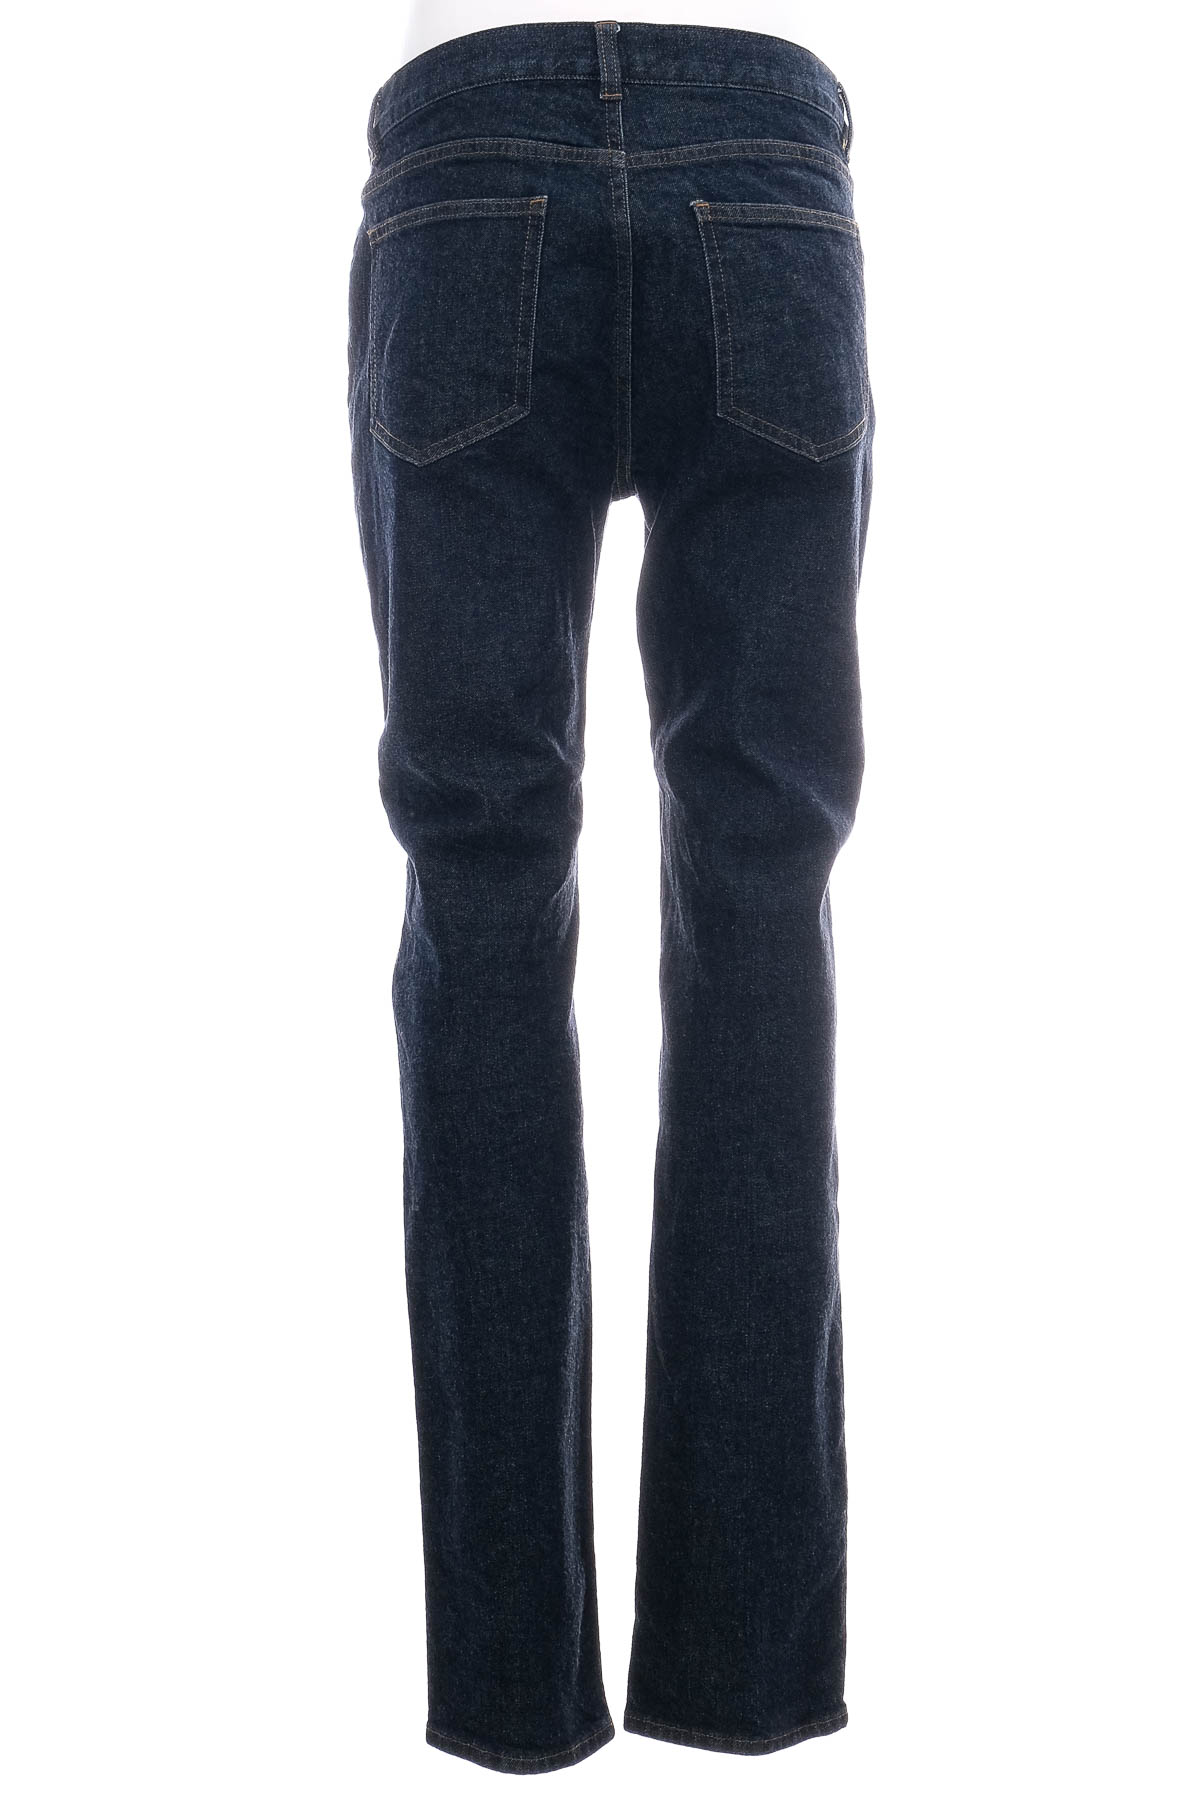 Men's jeans - ARKET - 1